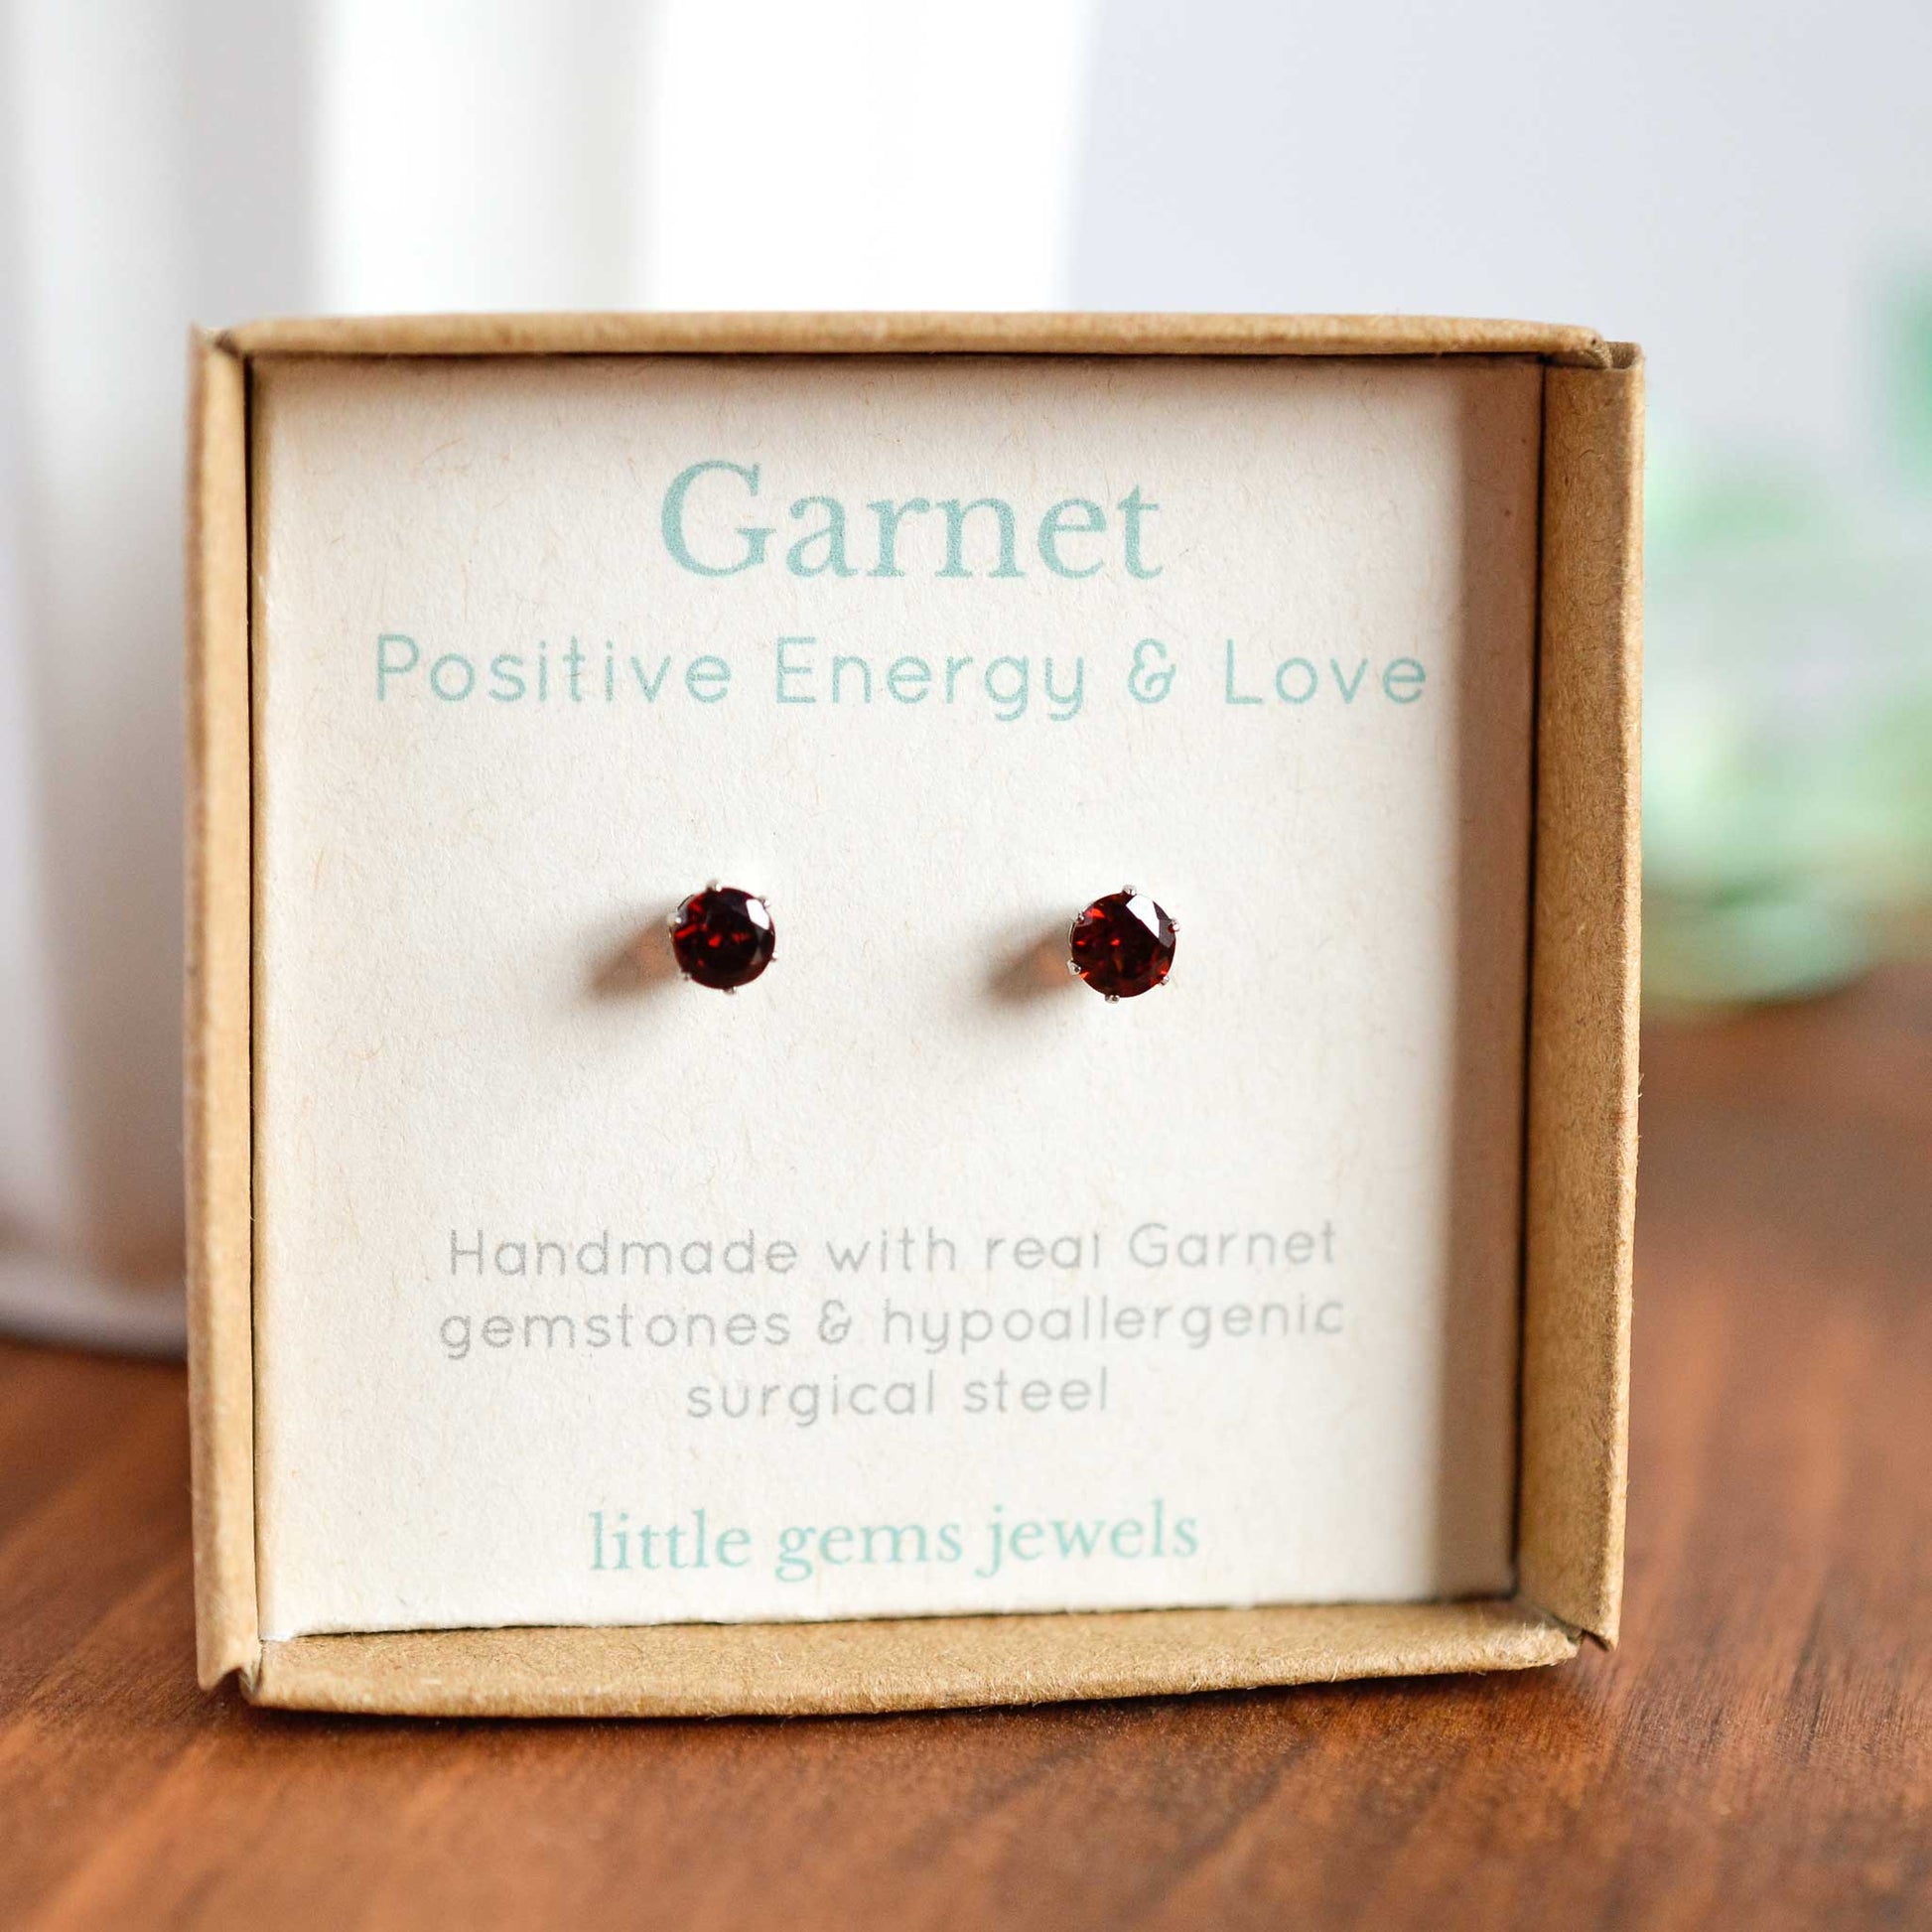 Tiny Garnet gemstone stud earrings in gift box